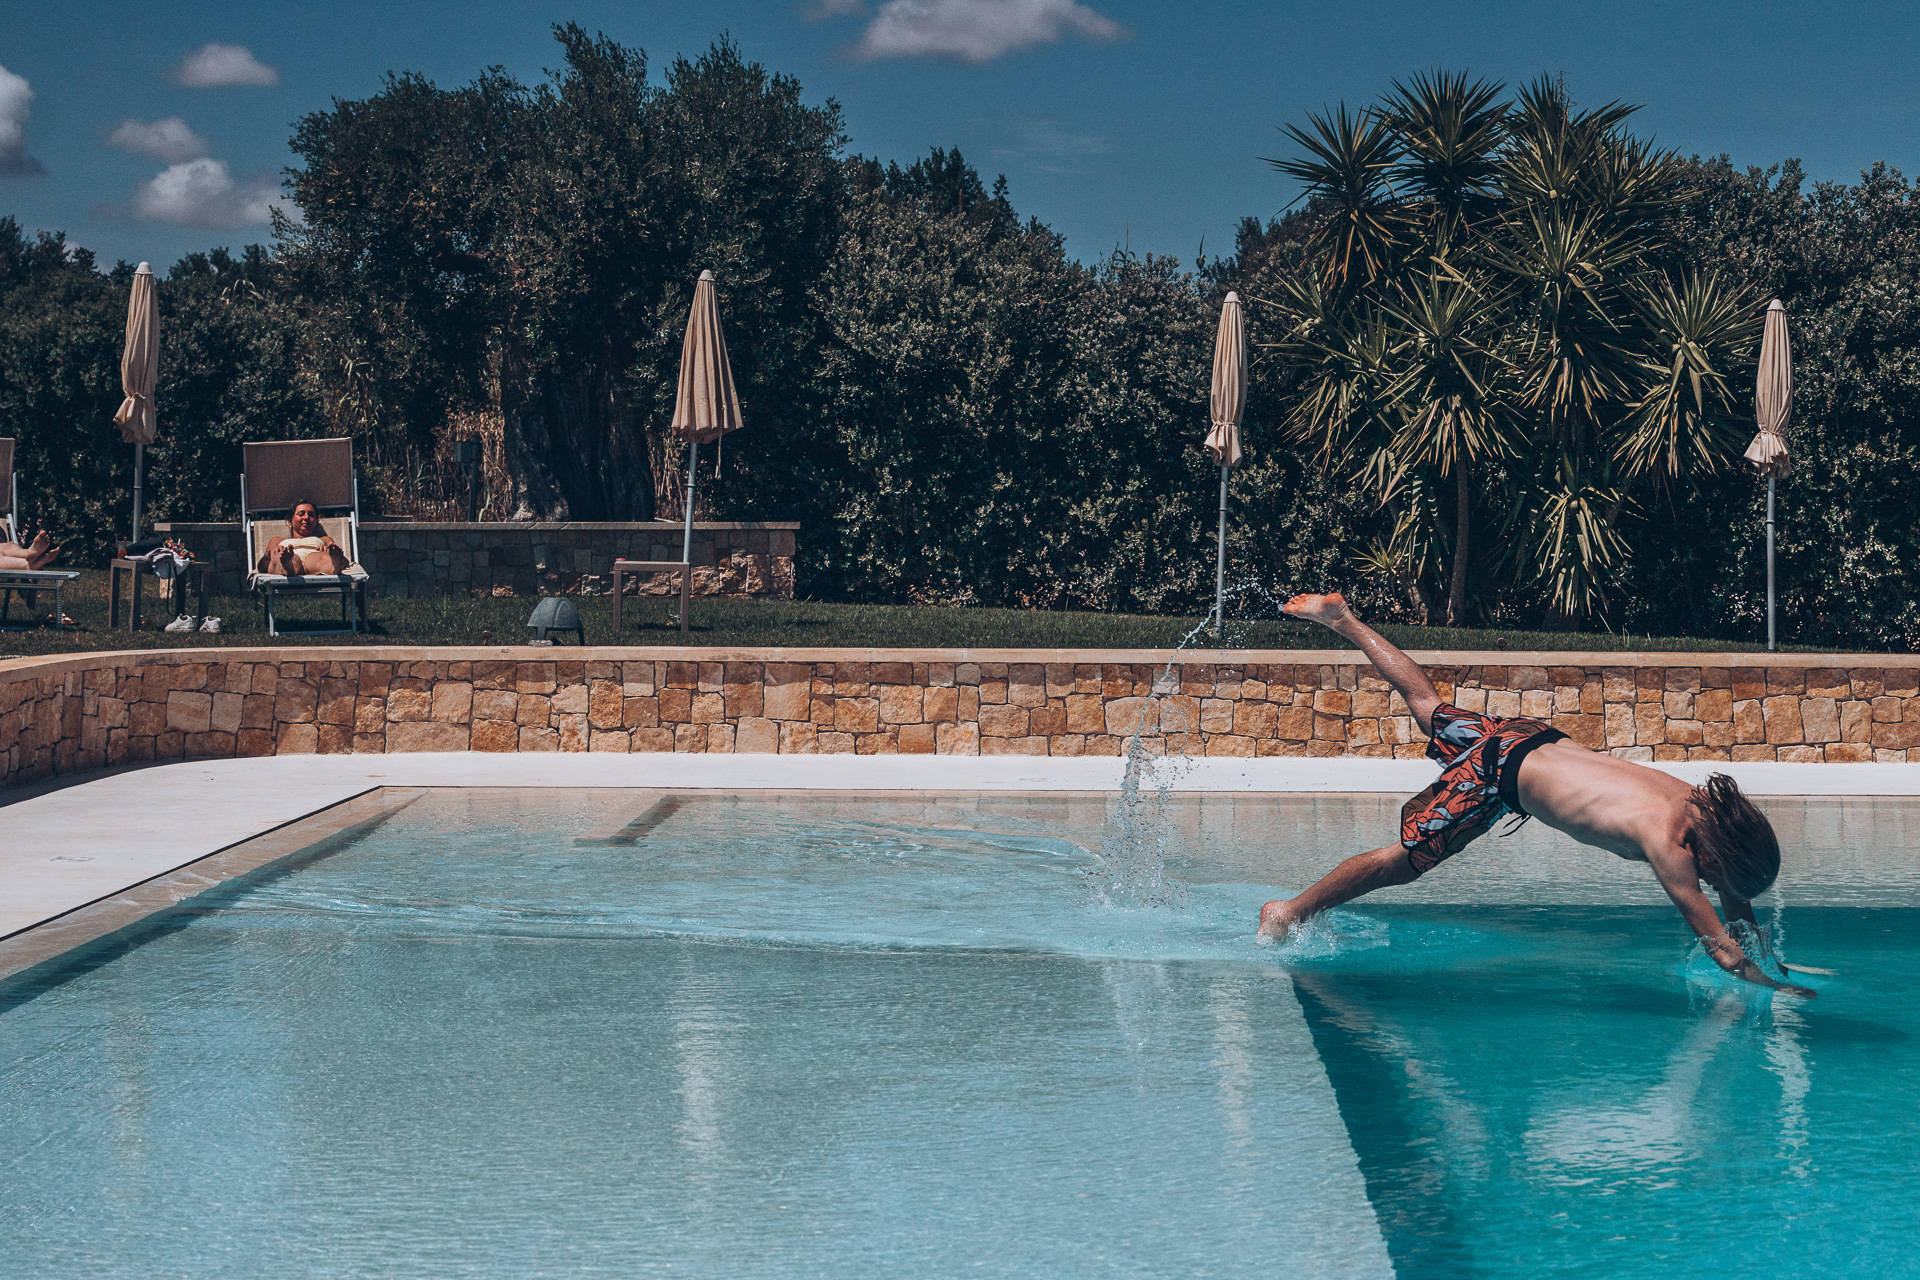 Destination wedding photography - A man jumps into a pool